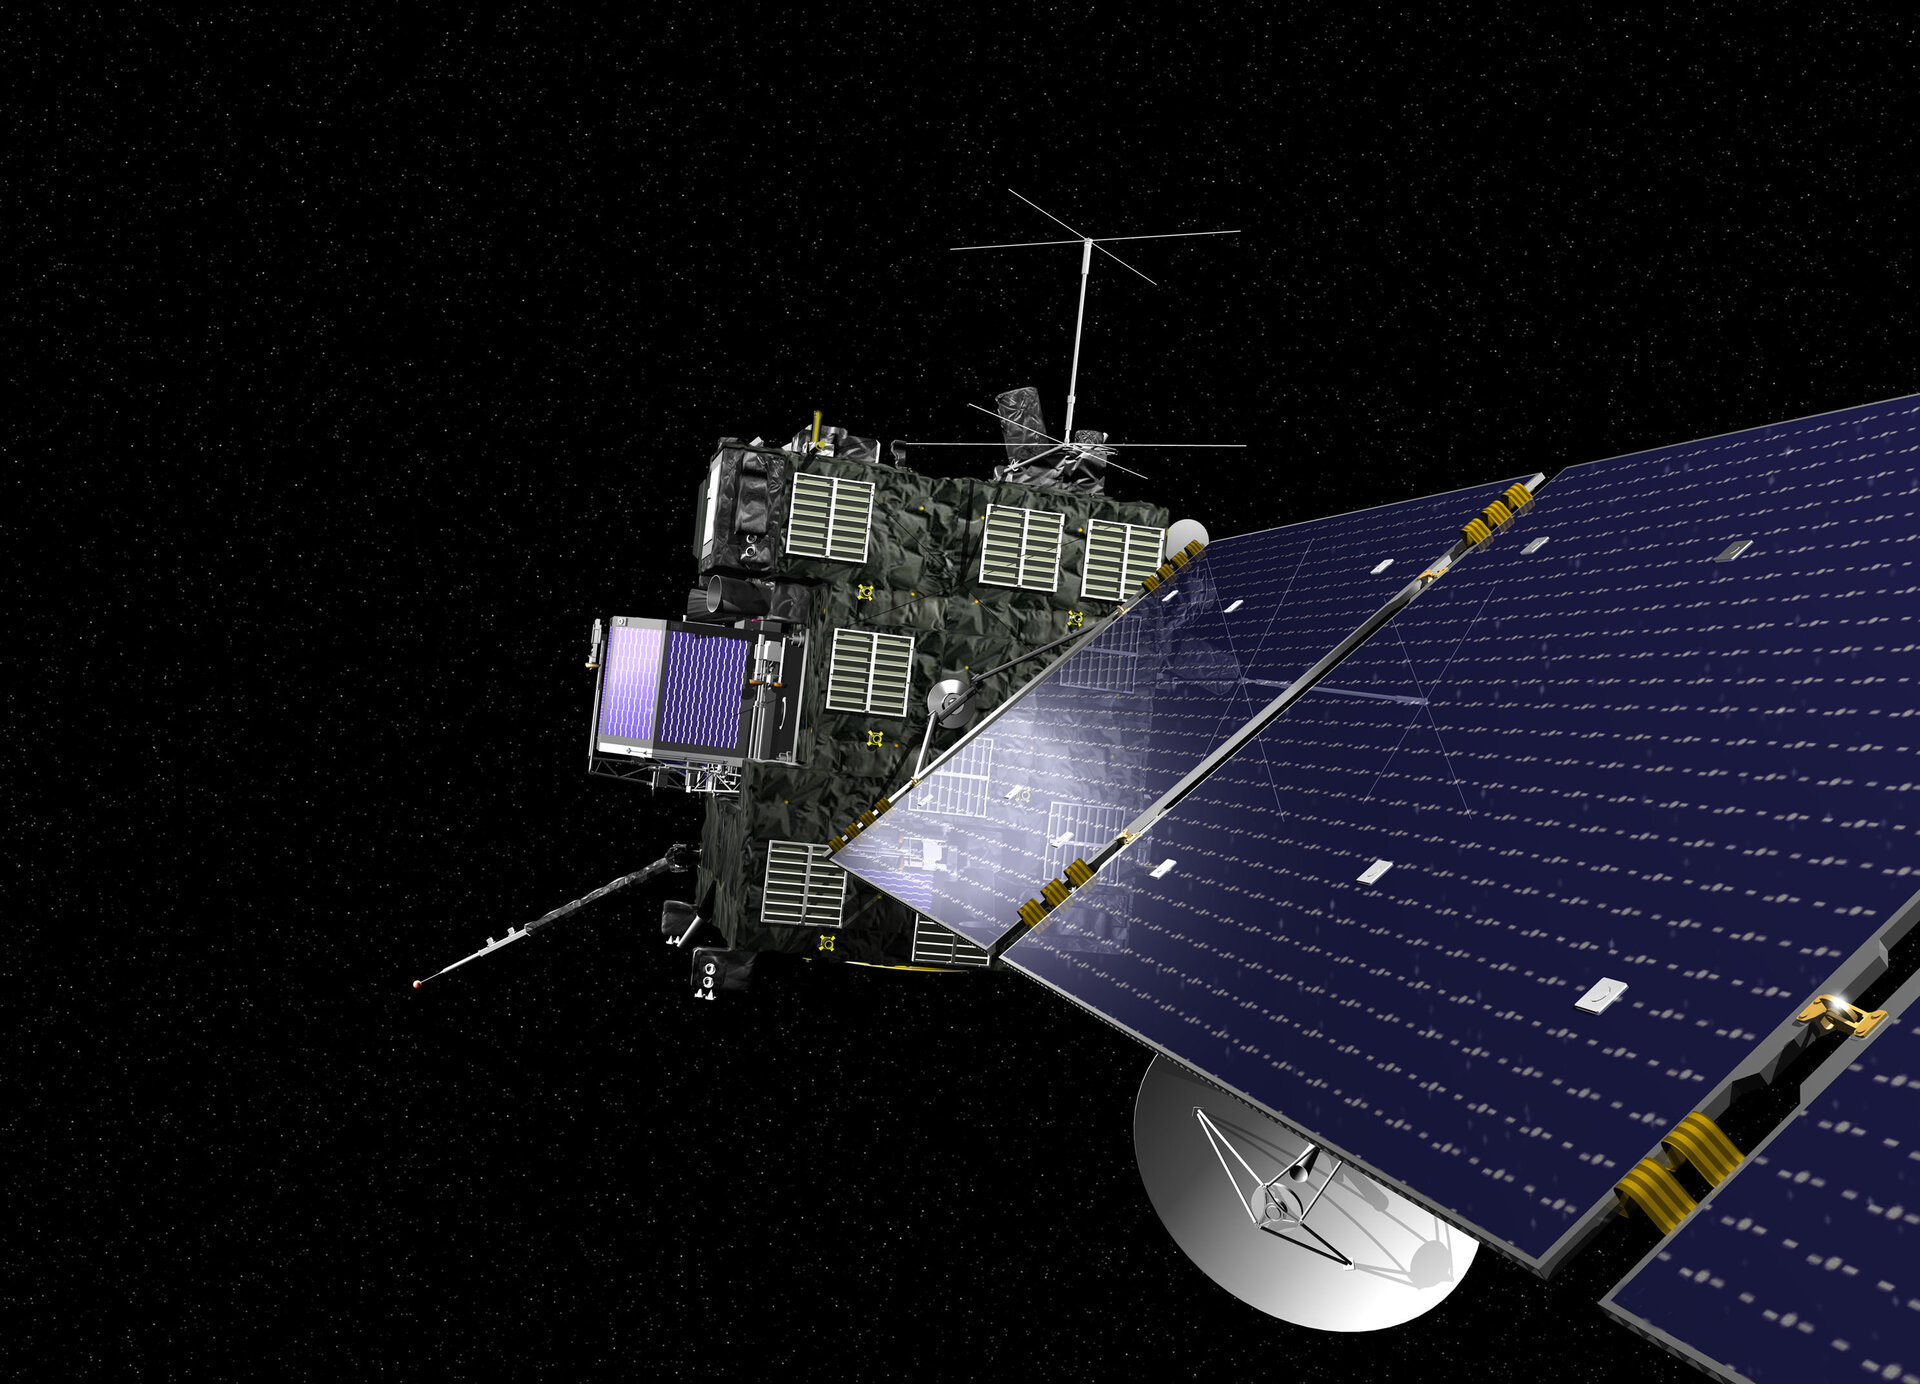 ESA's Rosetta mission relies on advanced LILT solar panels